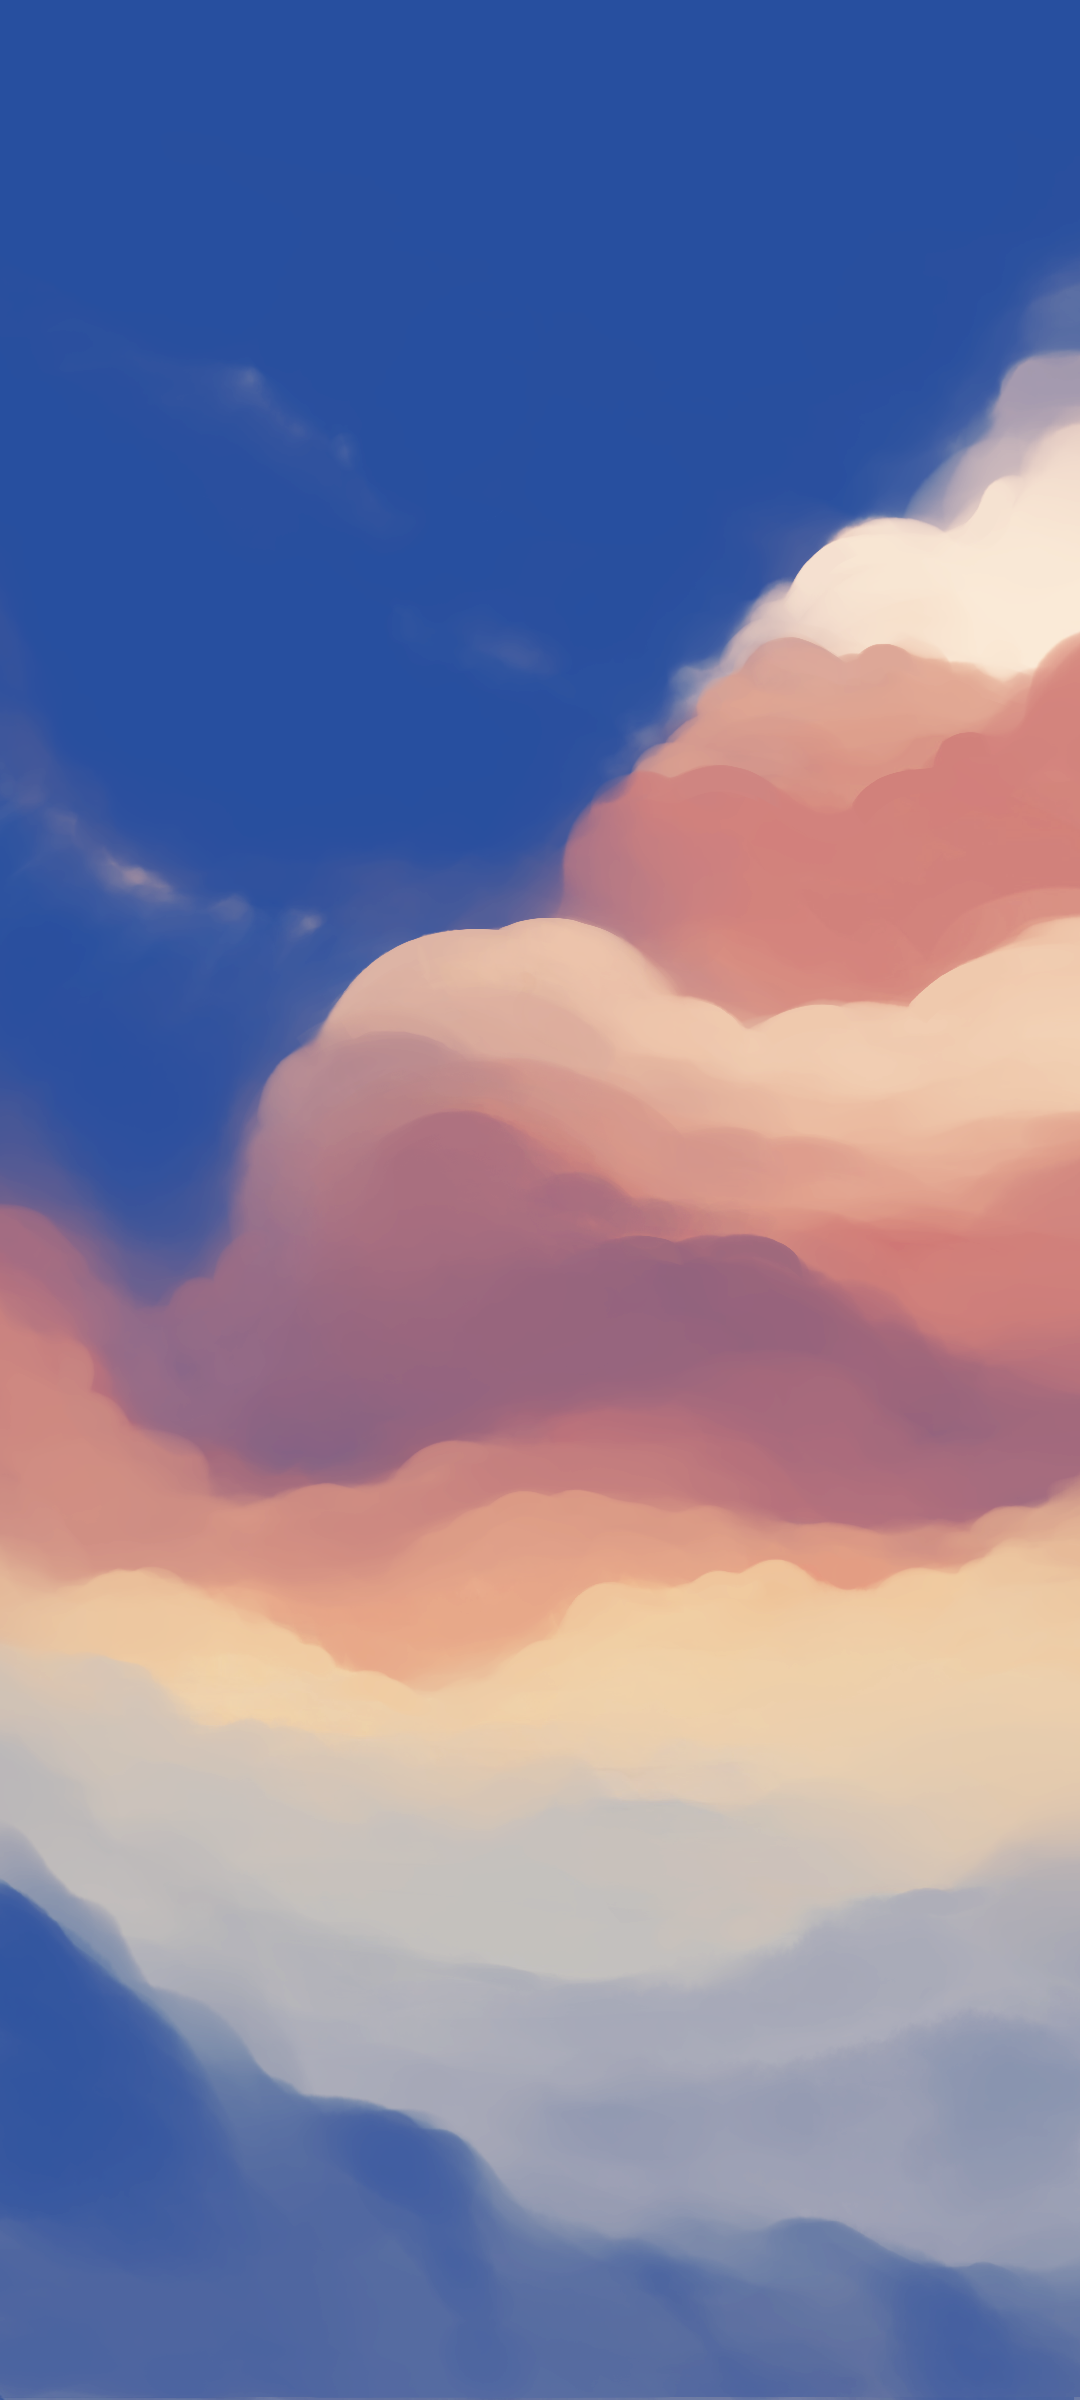 Blue Orange sky landscape above colorful clouds